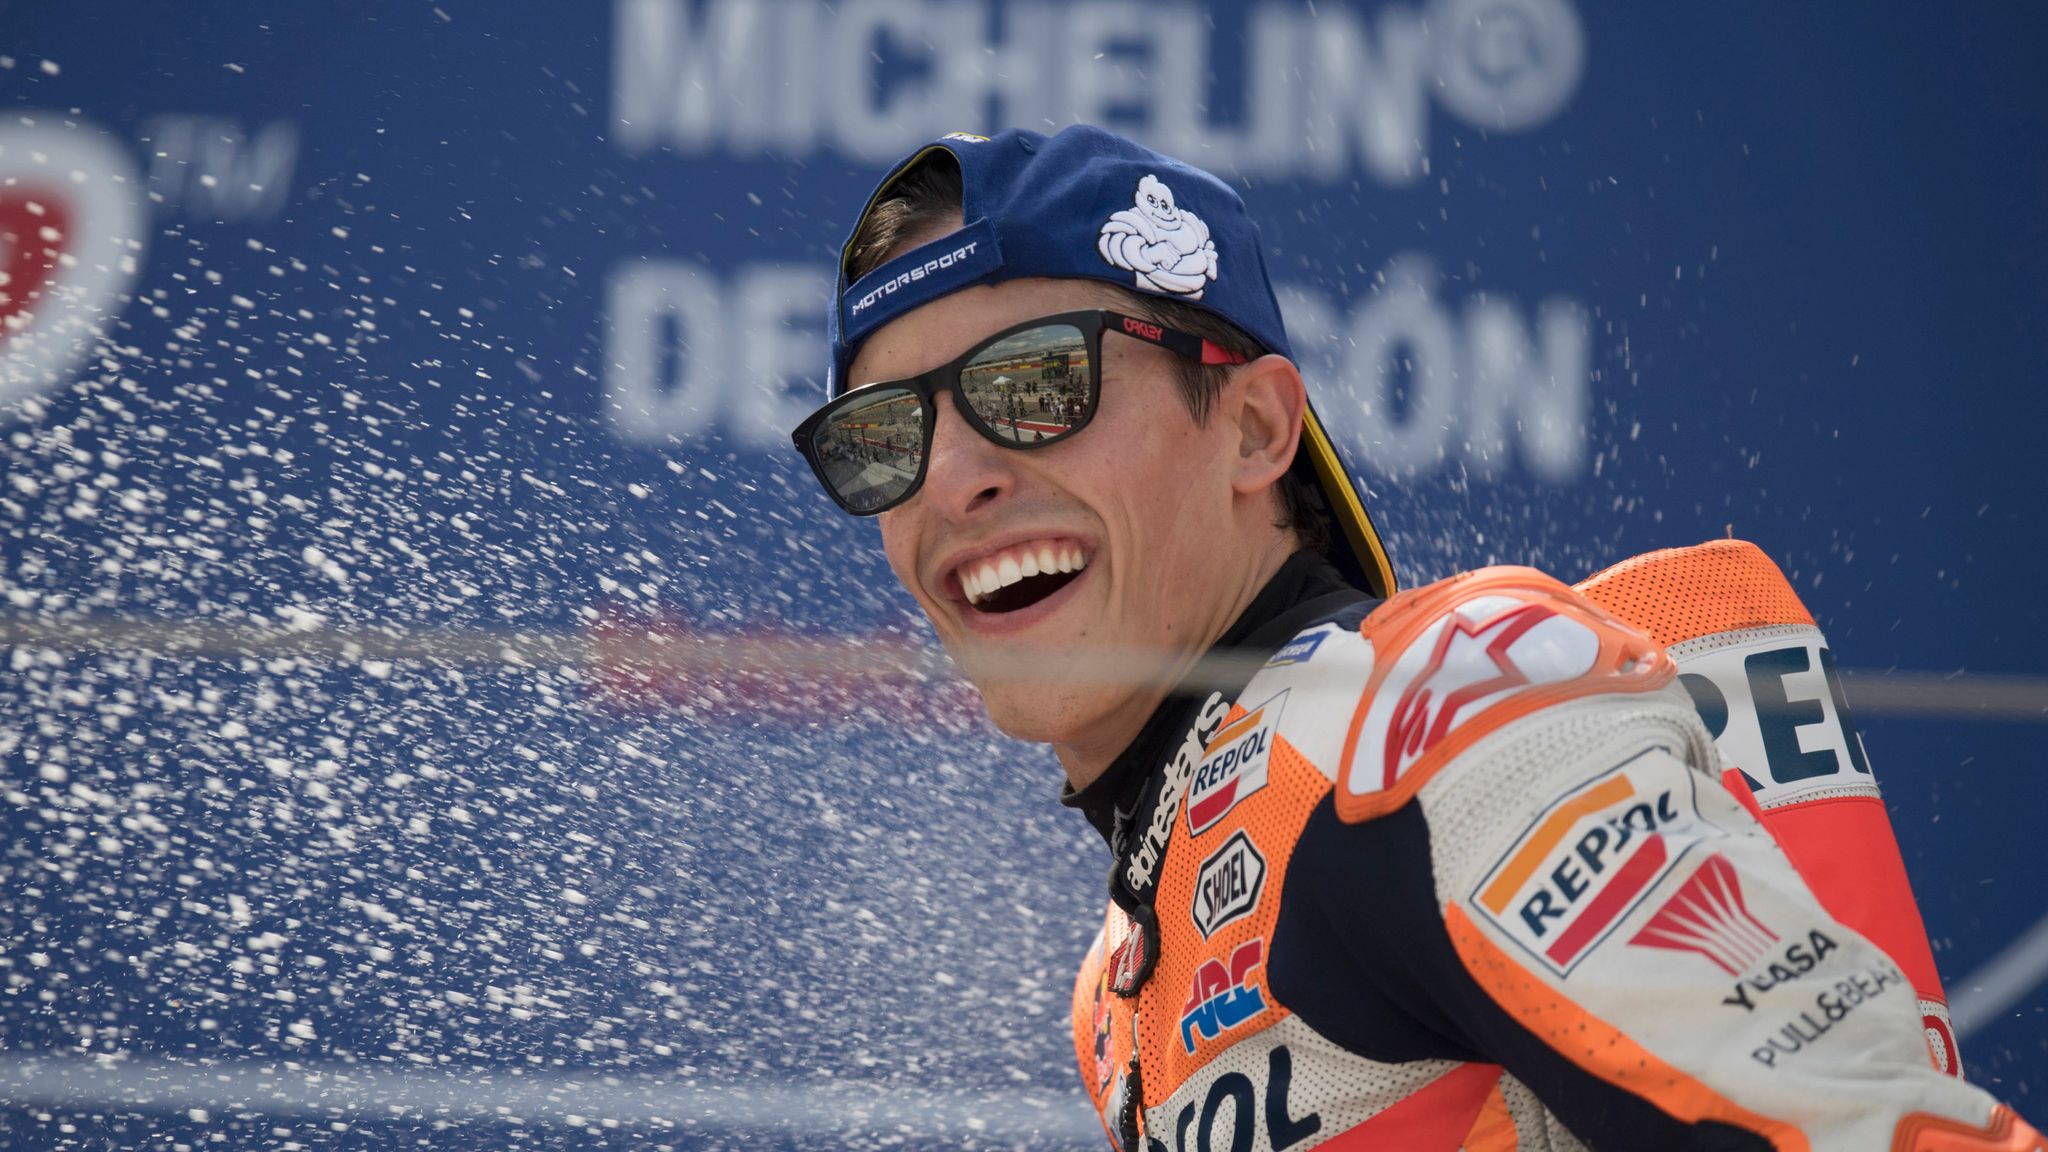 Marc Marquez wins sixth MotoGP world championship Motor Racing News Sky Sports